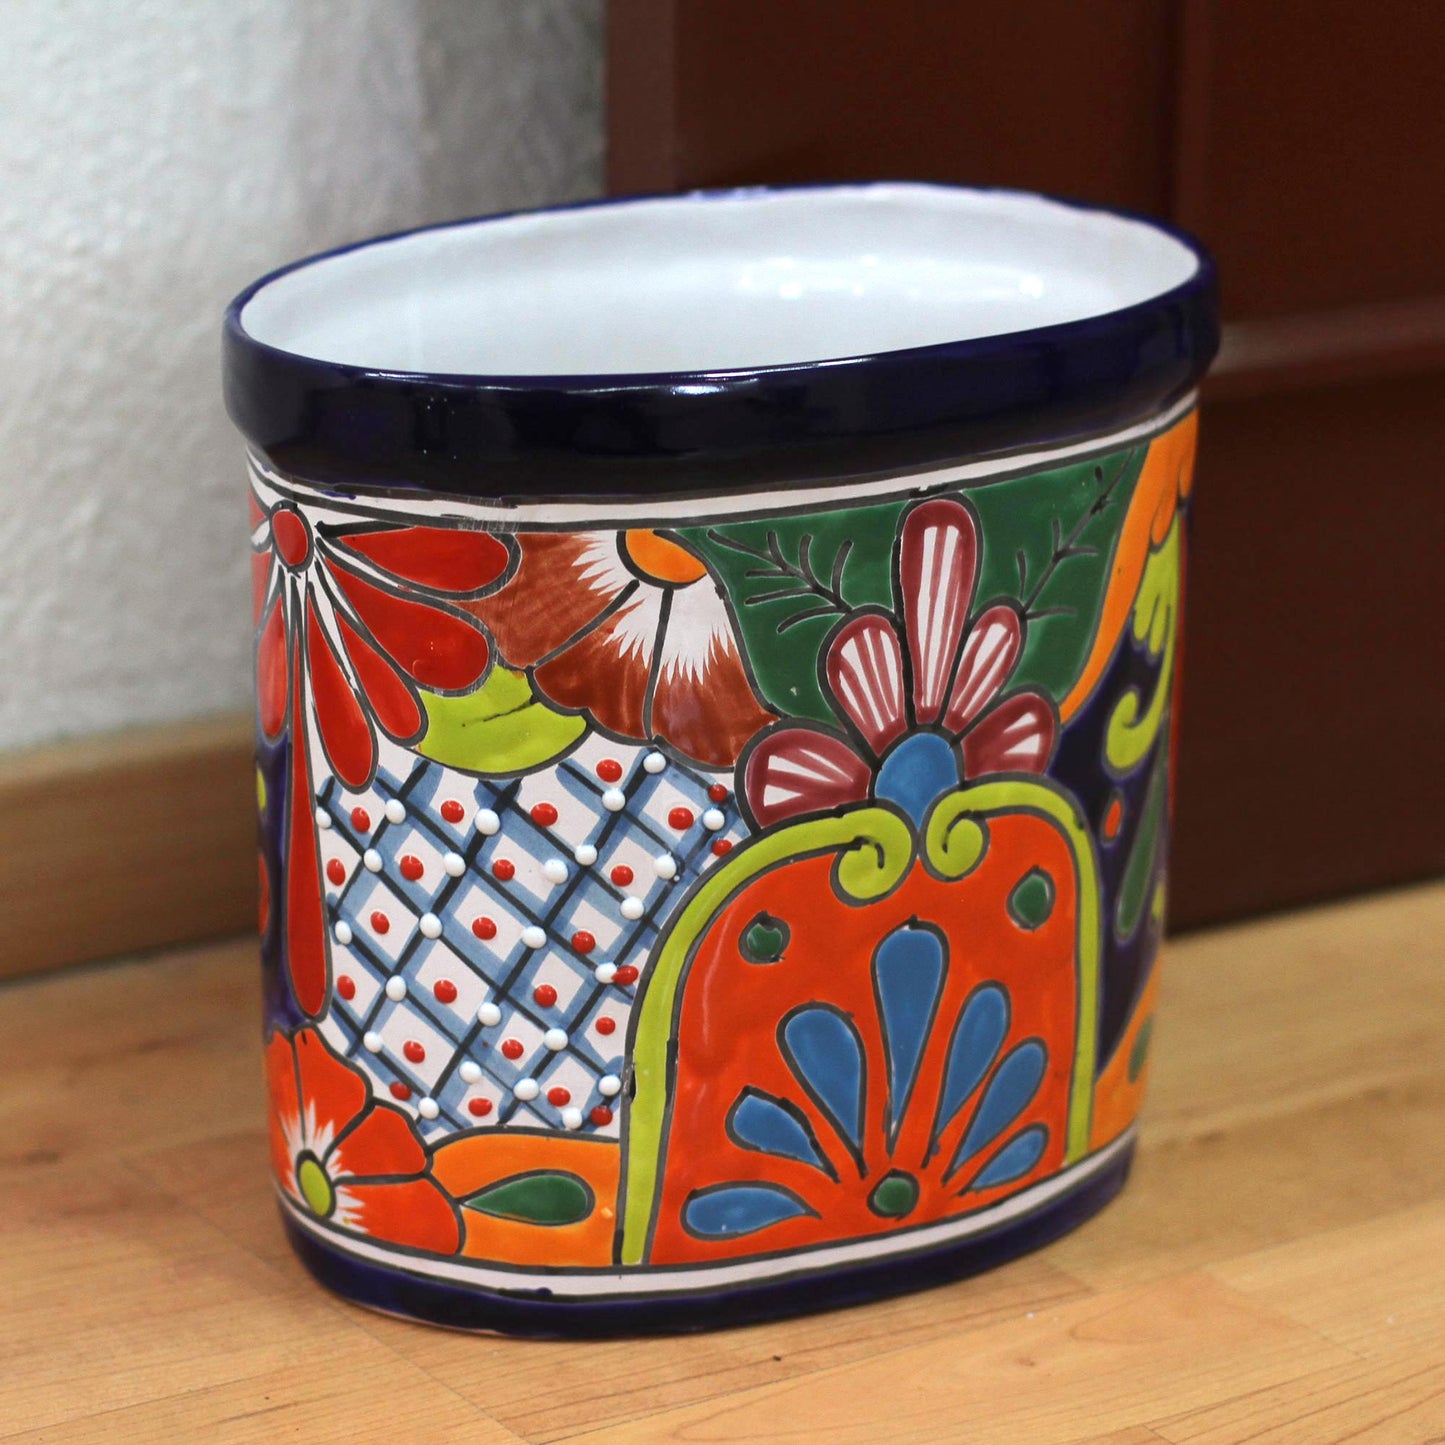 Talavera Collector Floral Talavera-Style Ceramic Waste Bin from Mexico